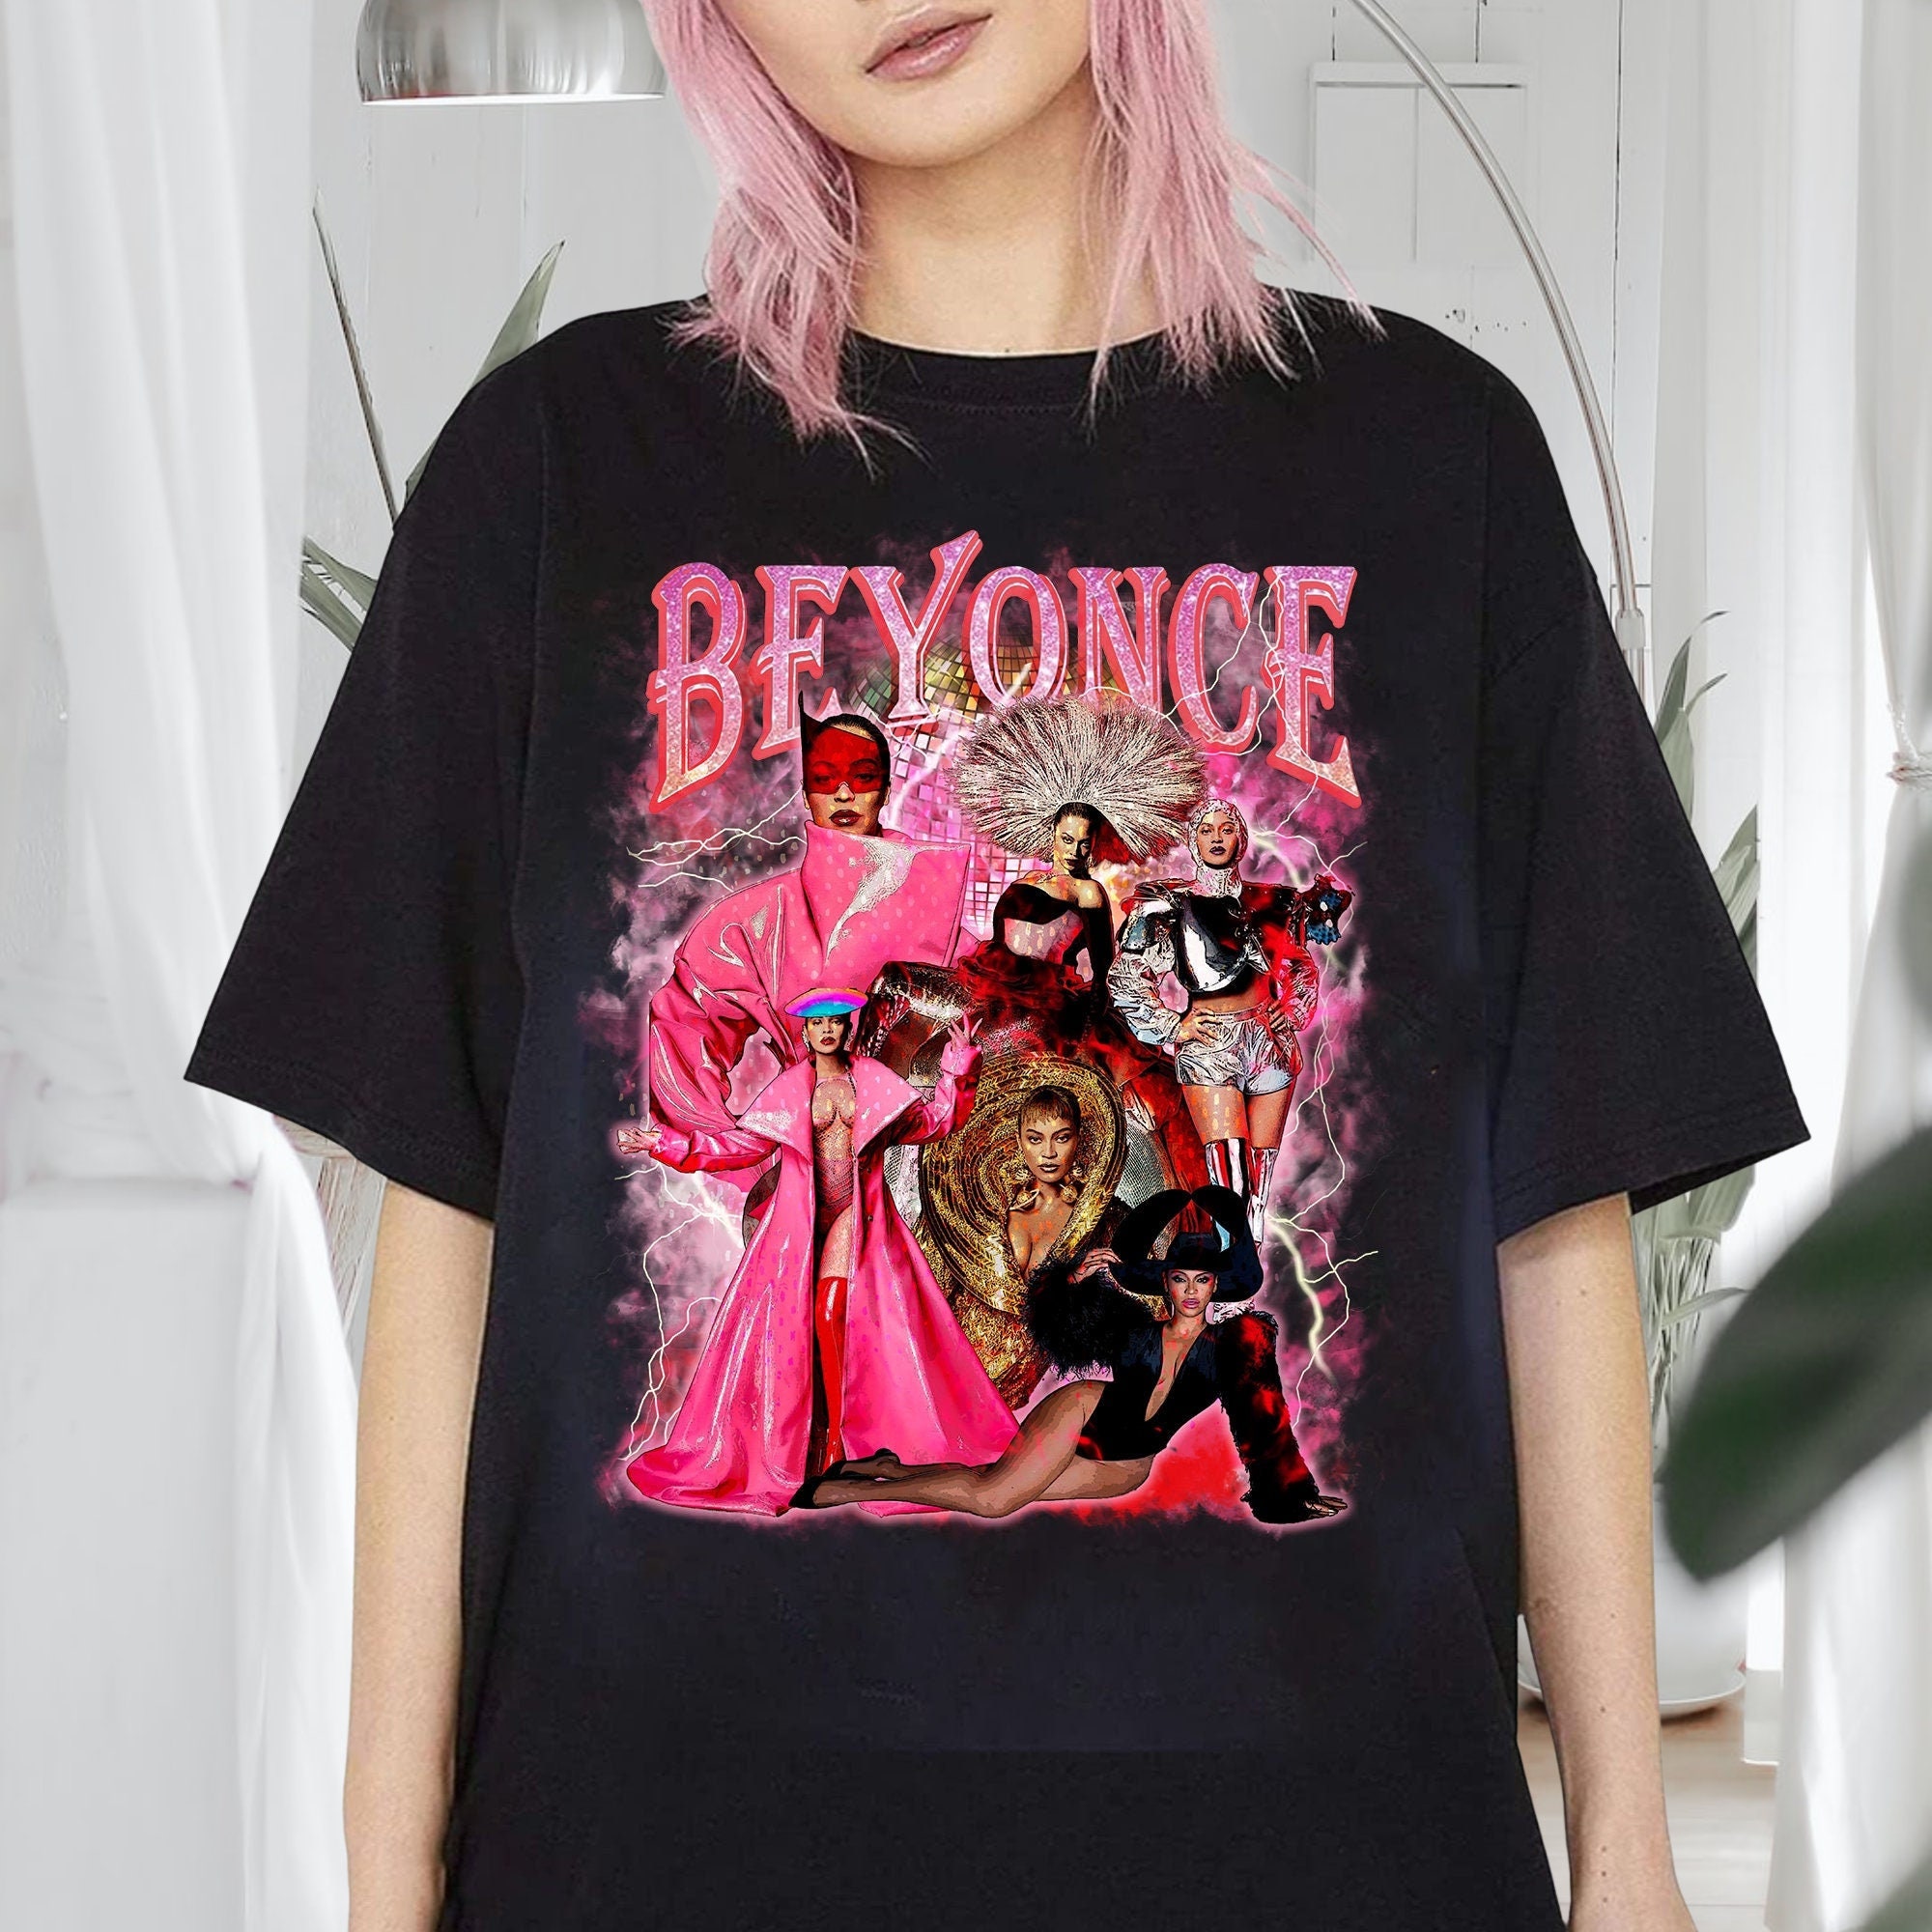 Discover Renaissance Beyonc Vintage 90s Shirt, Beyonce Retro Vintage Shirt